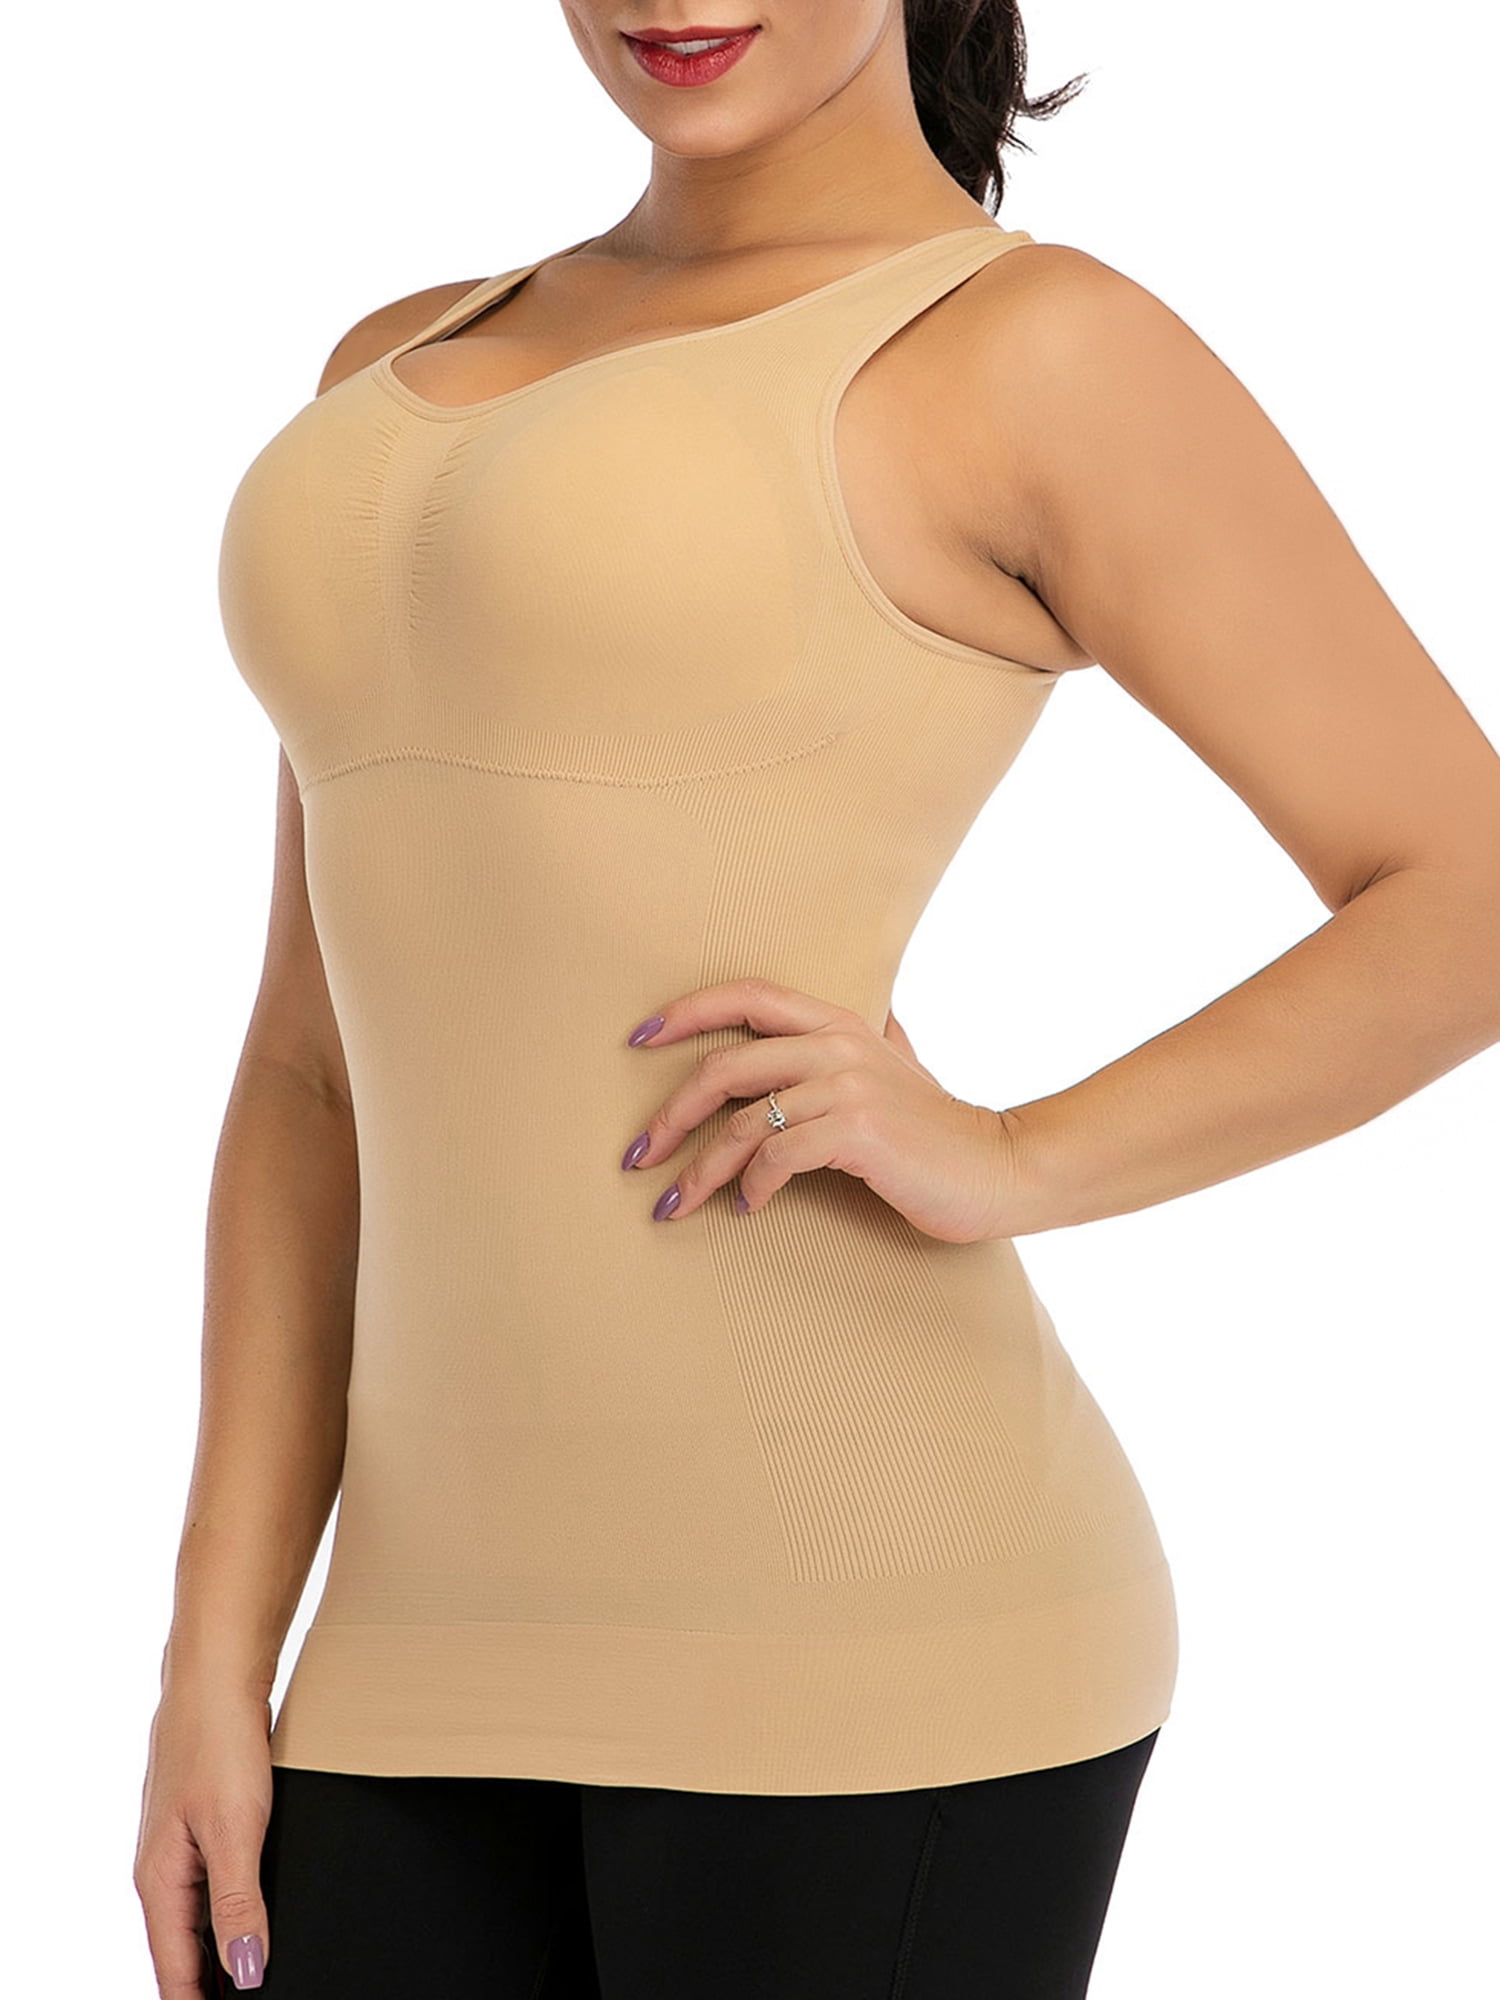 Cami Shaper for Women Slimming Shapewear Tank Top Tummy Control